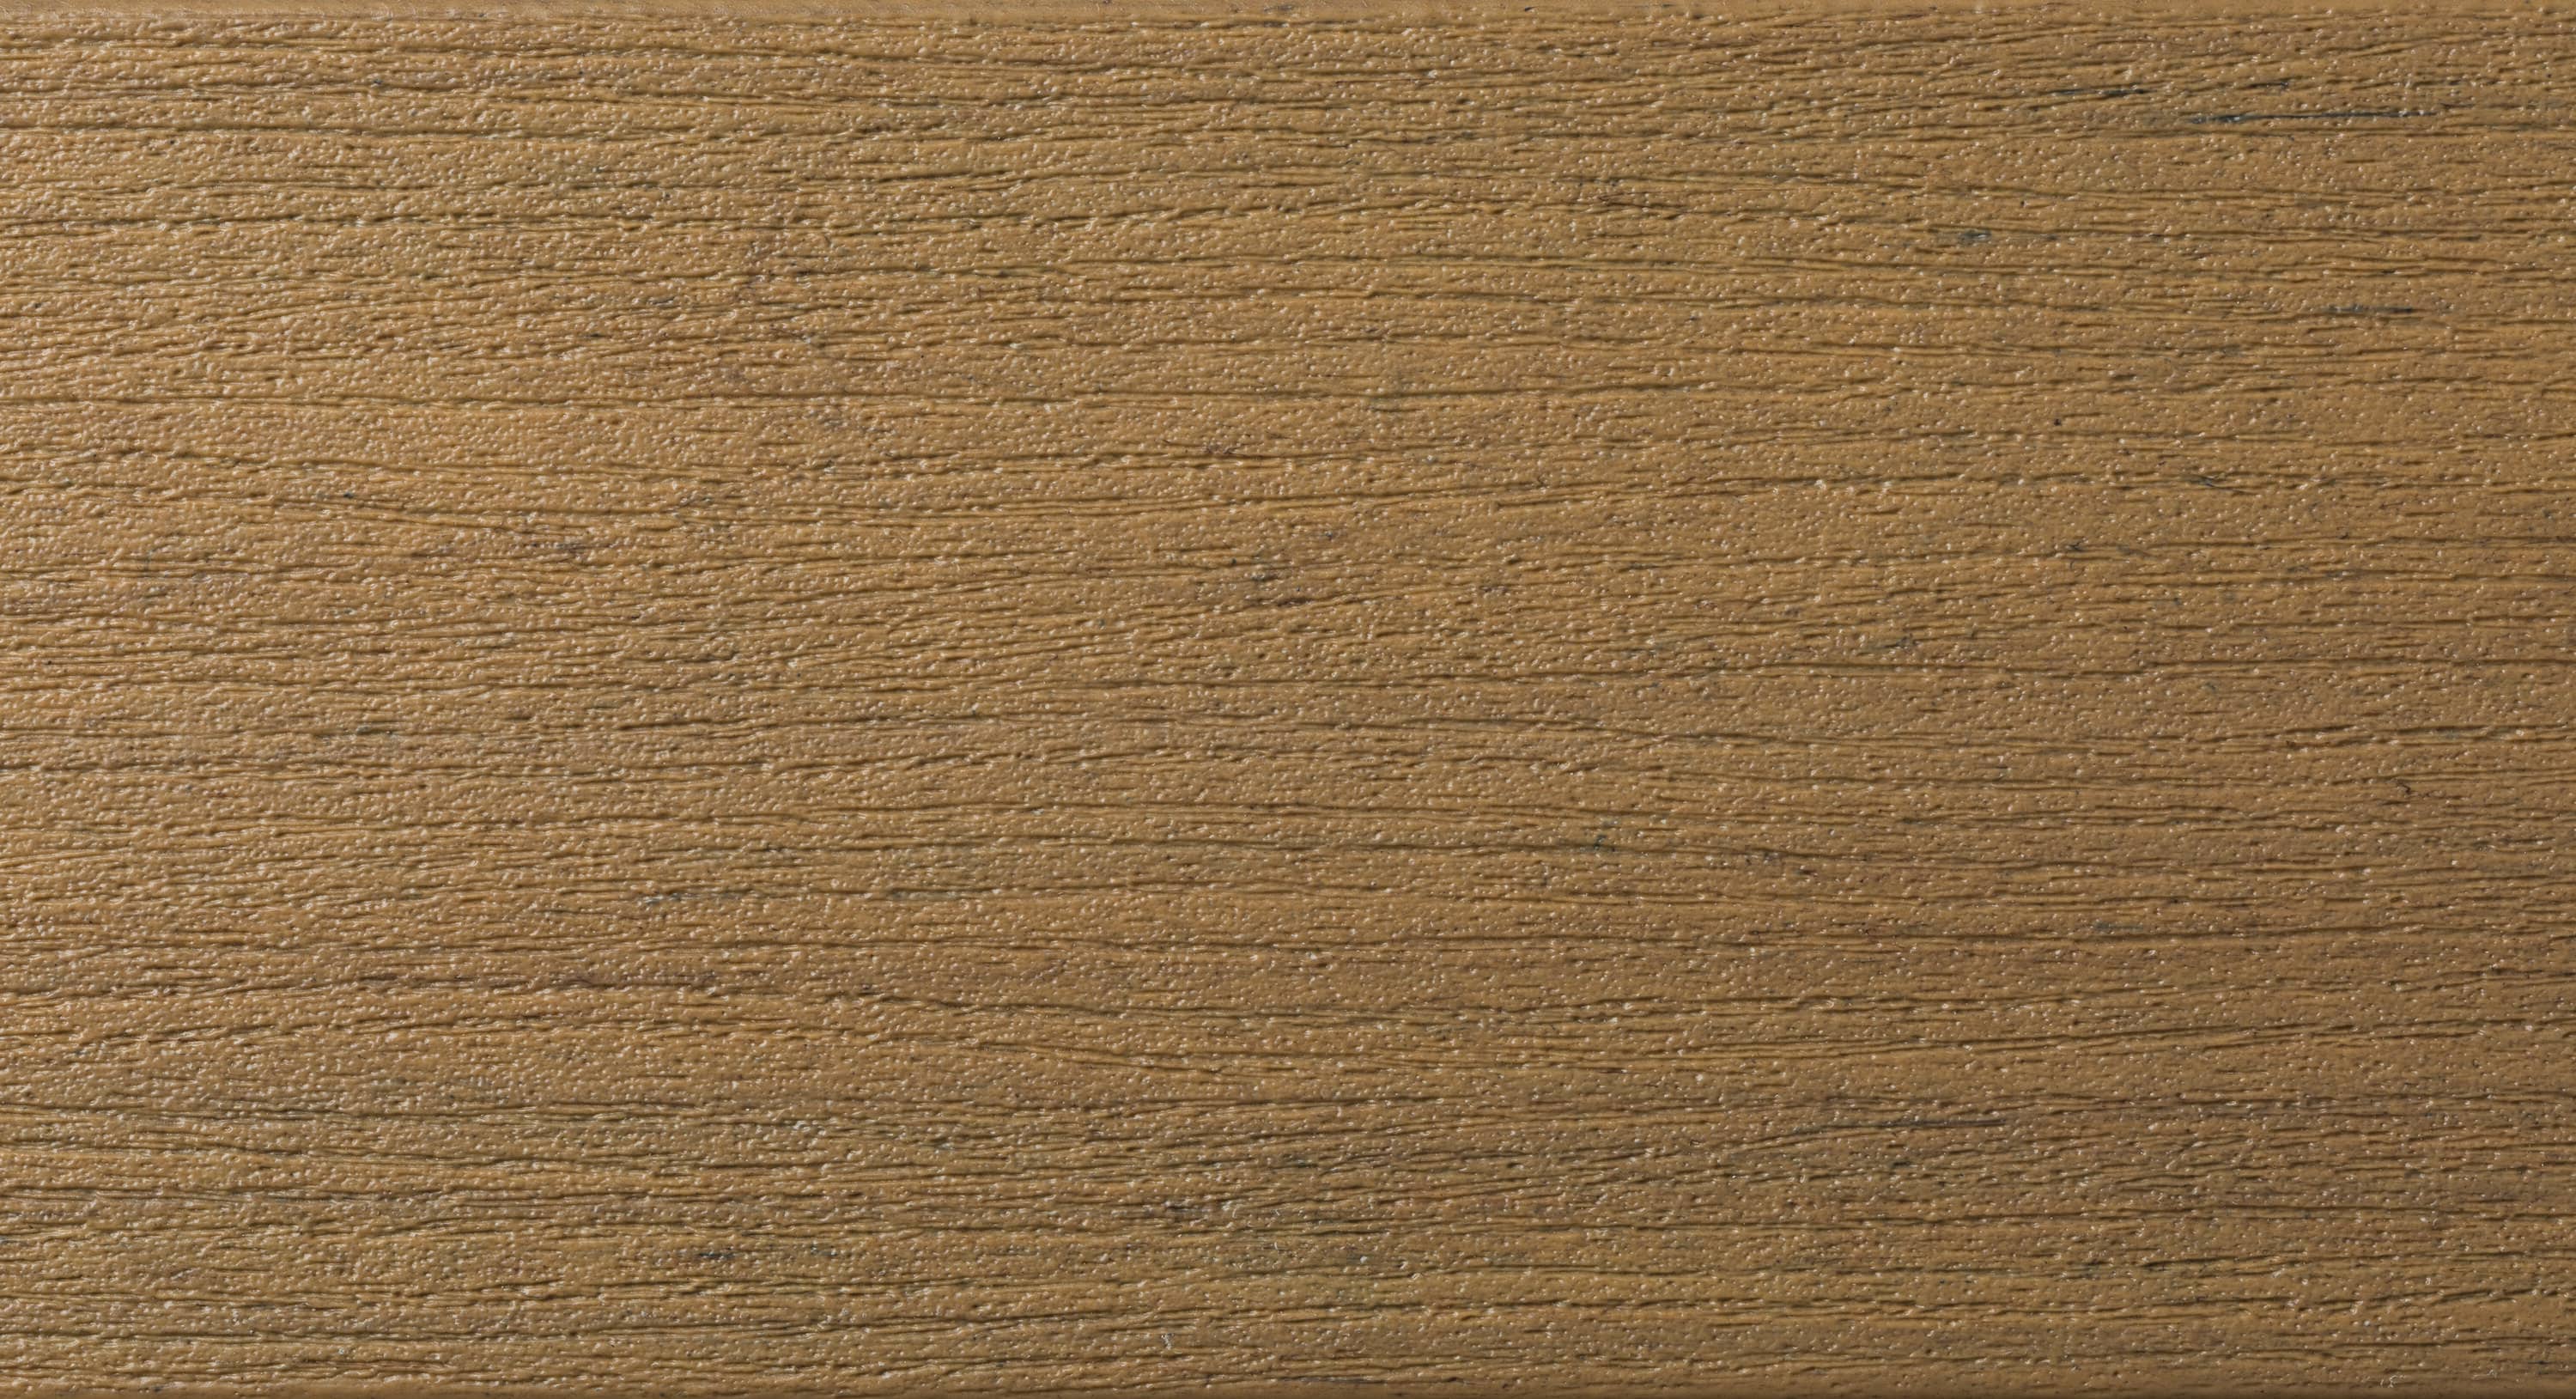 Prime+ 5/4-in x 6-in x 16-ft Coconut Husk Square Composite Deck Board in Brown/Tan | - TimberTech PR5416CH